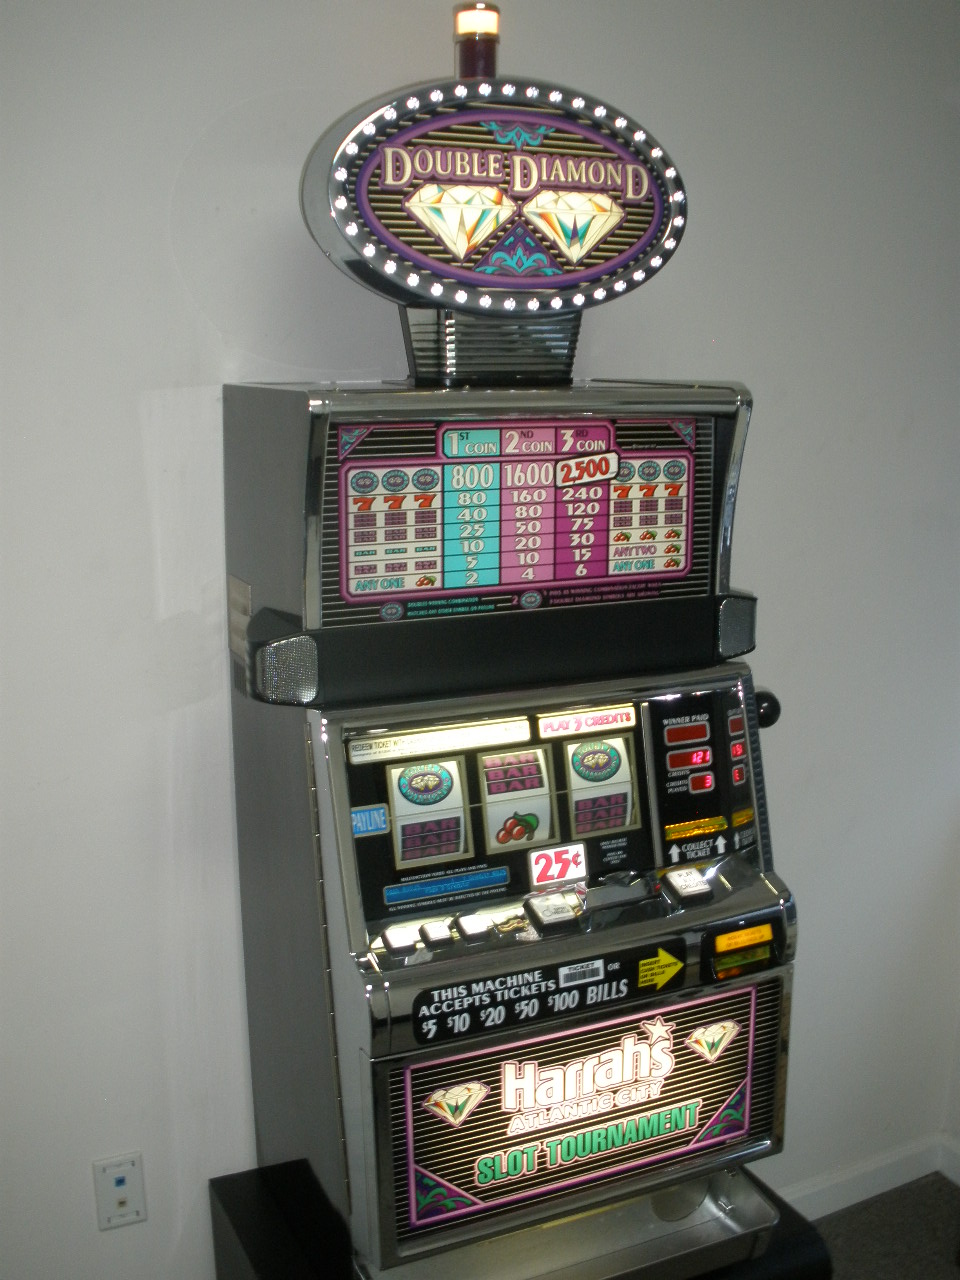 Igt Slot Machine Not Reading Dollars